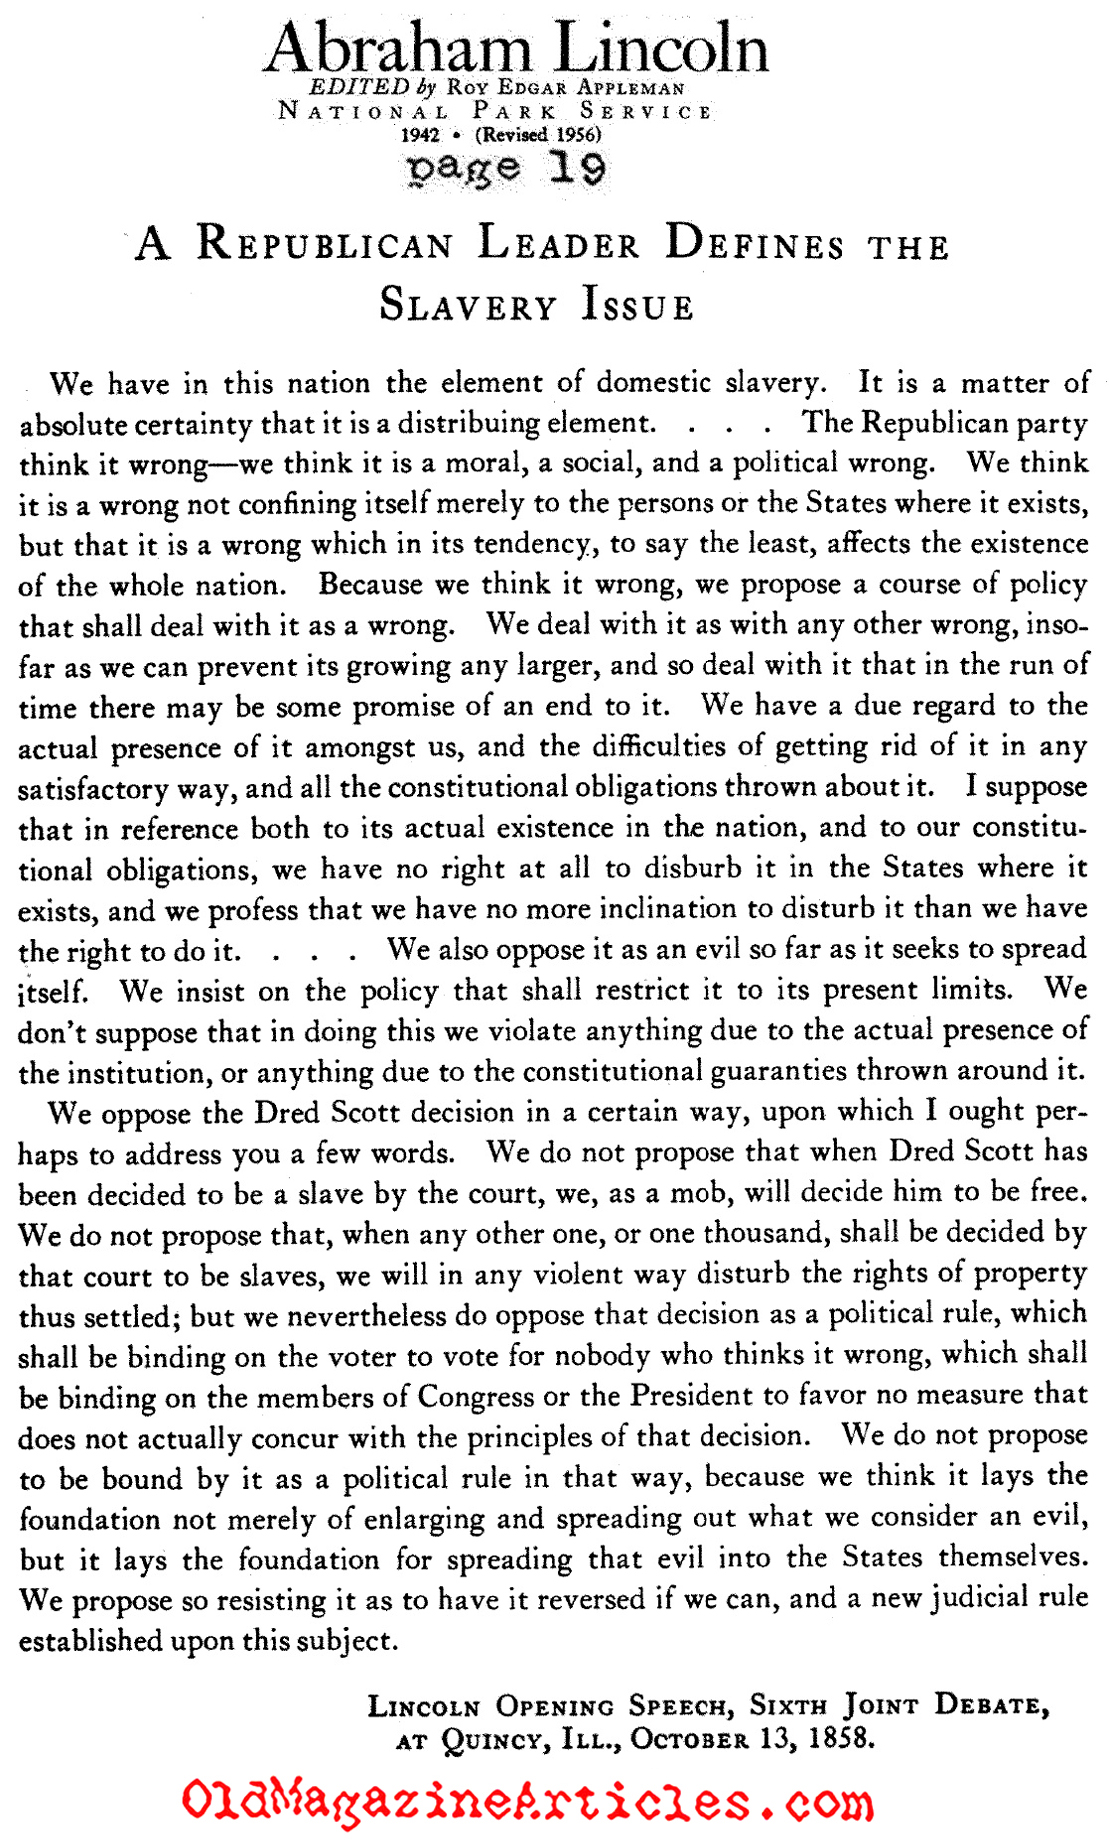 The Lincoln - Douglas Debates: Defining Slavery (National Park Service, 1956)